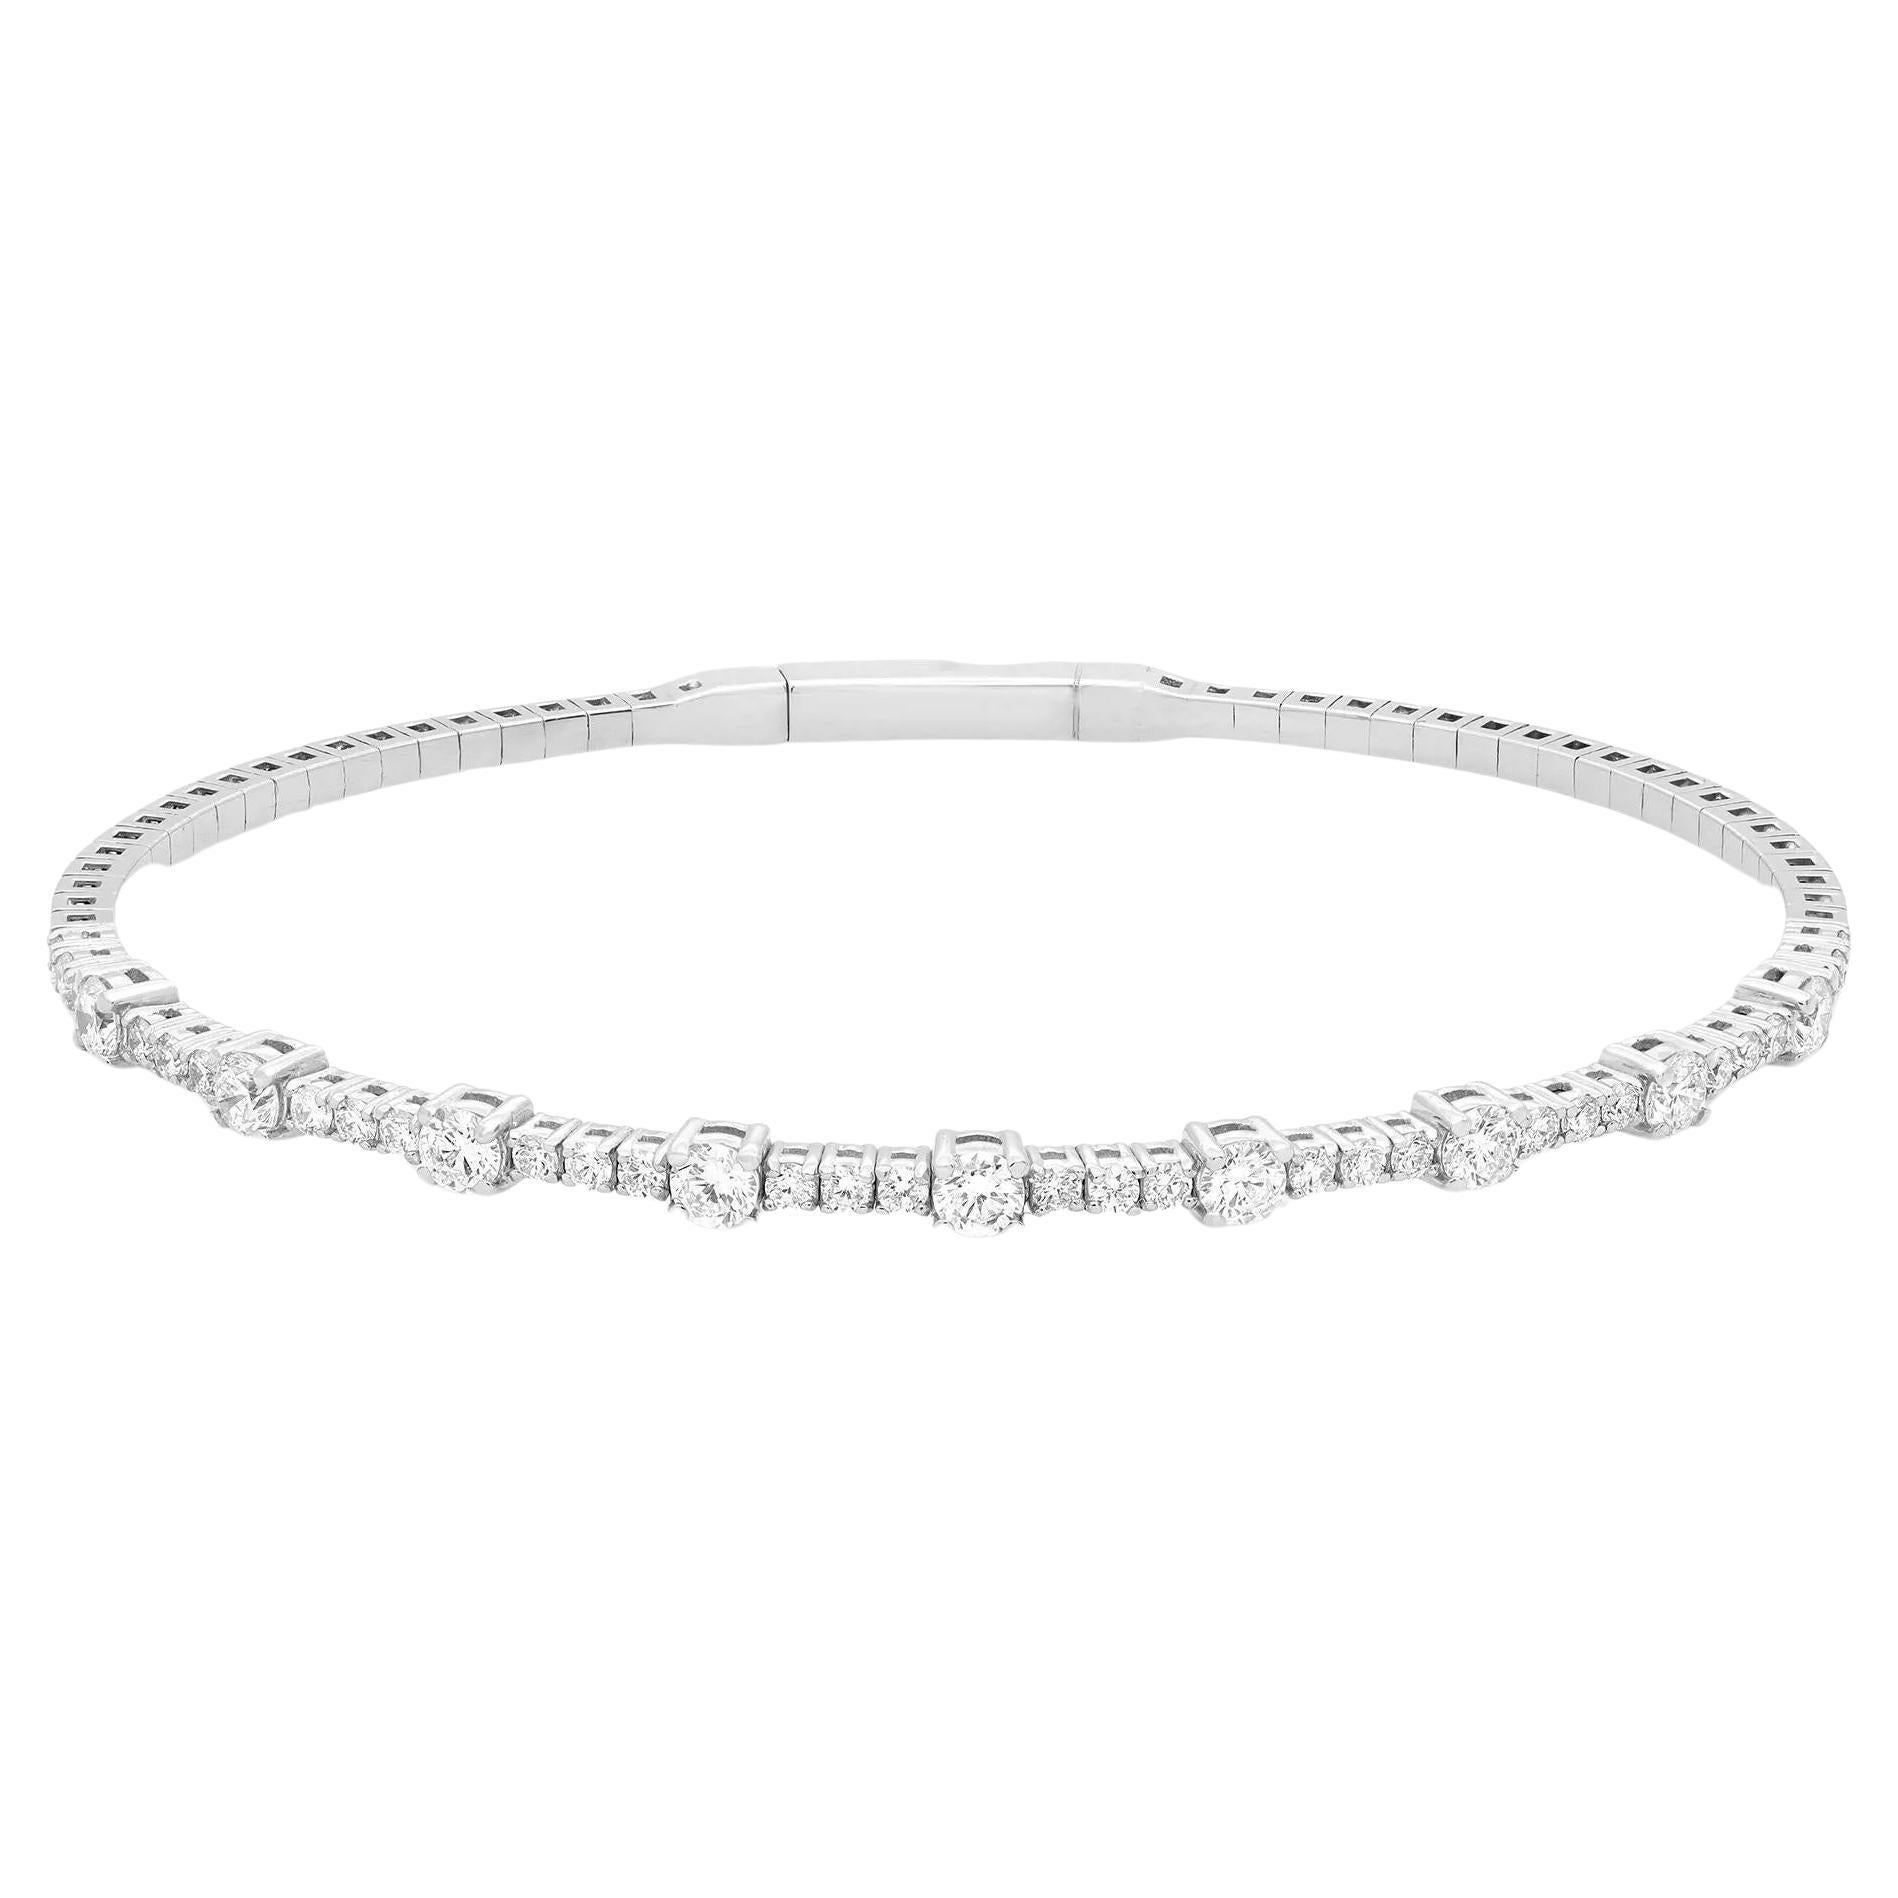 Rachel Koen 1.50cttw Round Cut Diamond Flexible Bangle Bracelet 14K White Gold For Sale